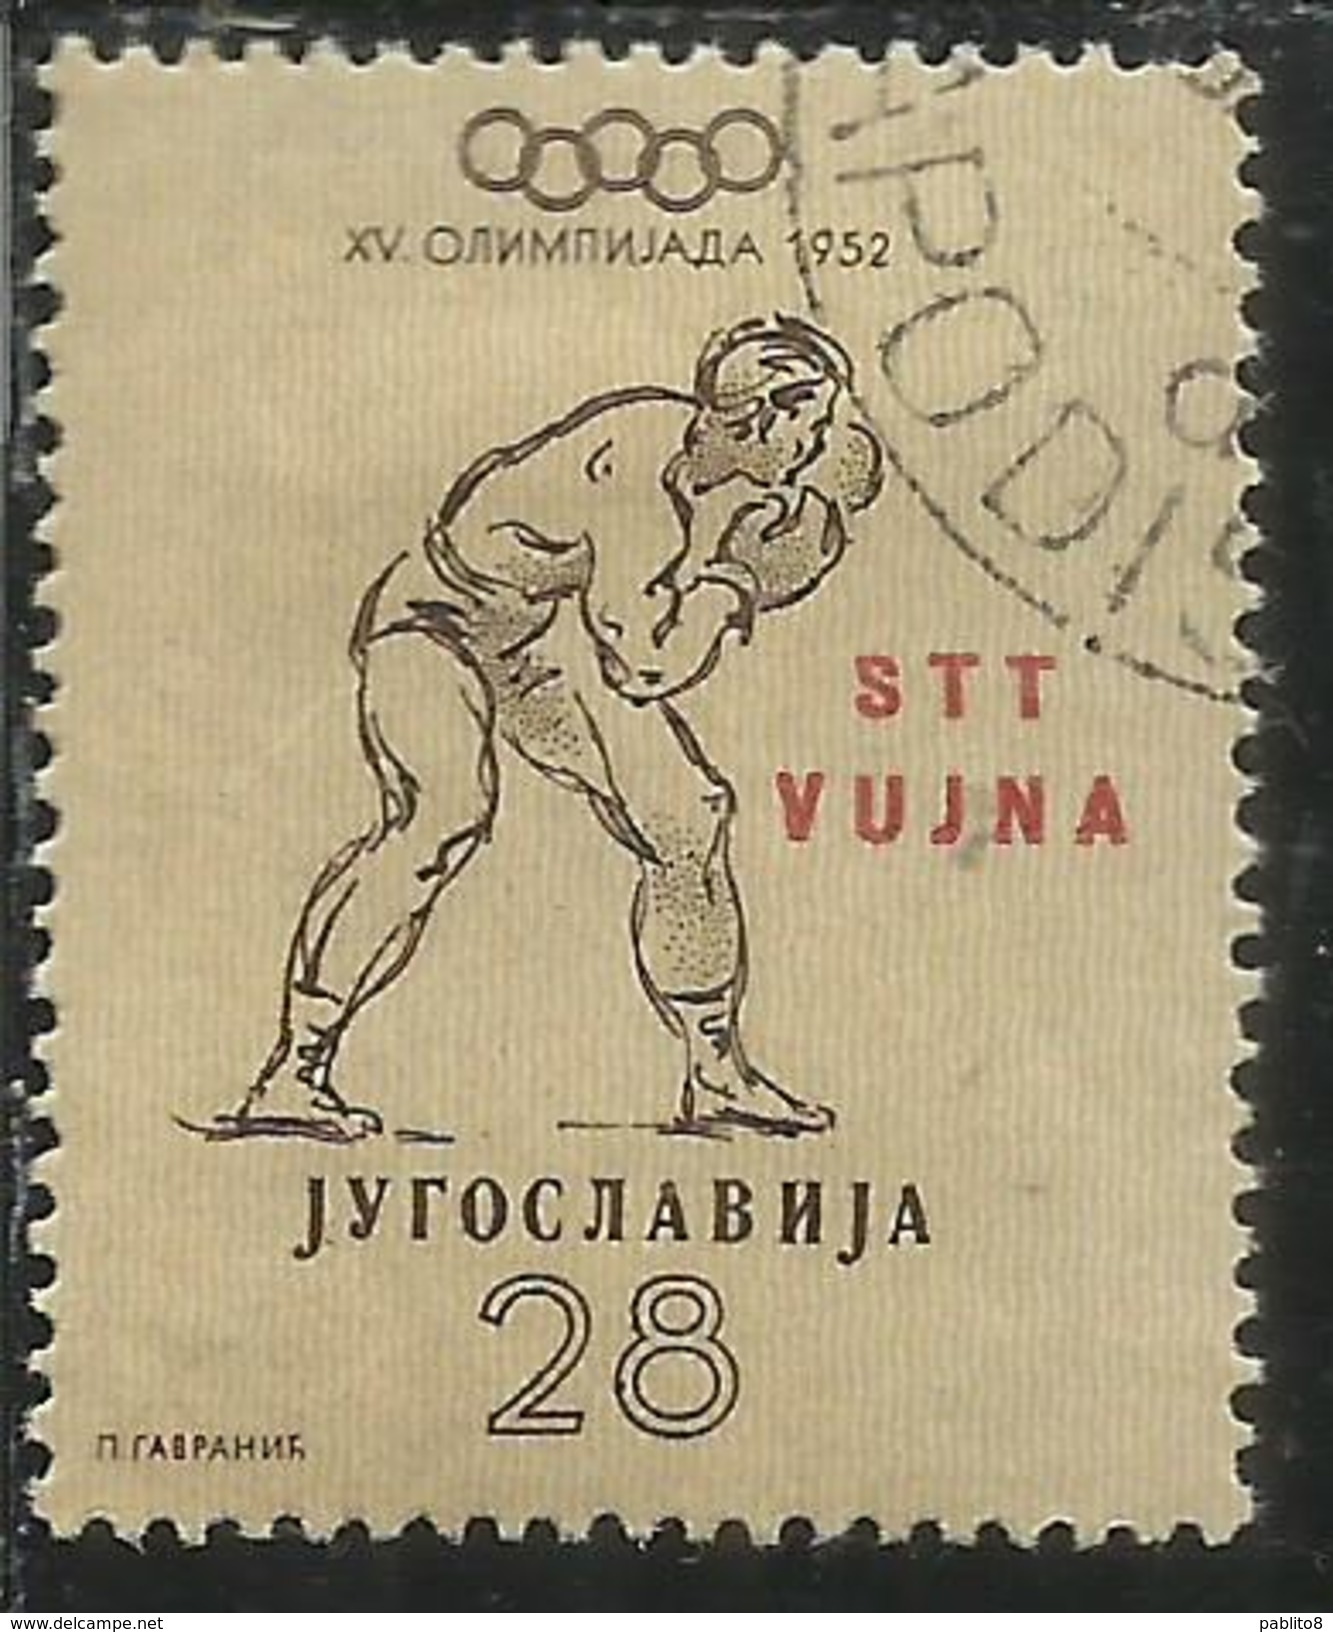 TRIESTE B 1953 YUGOSLAVIA SOPRASTAMPATO JUGOSLAVIA OVERPRINTED OLIMPIADE HELSINKI OLYMPIC GAMES 28 D 28d USATO USED - Mint/hinged